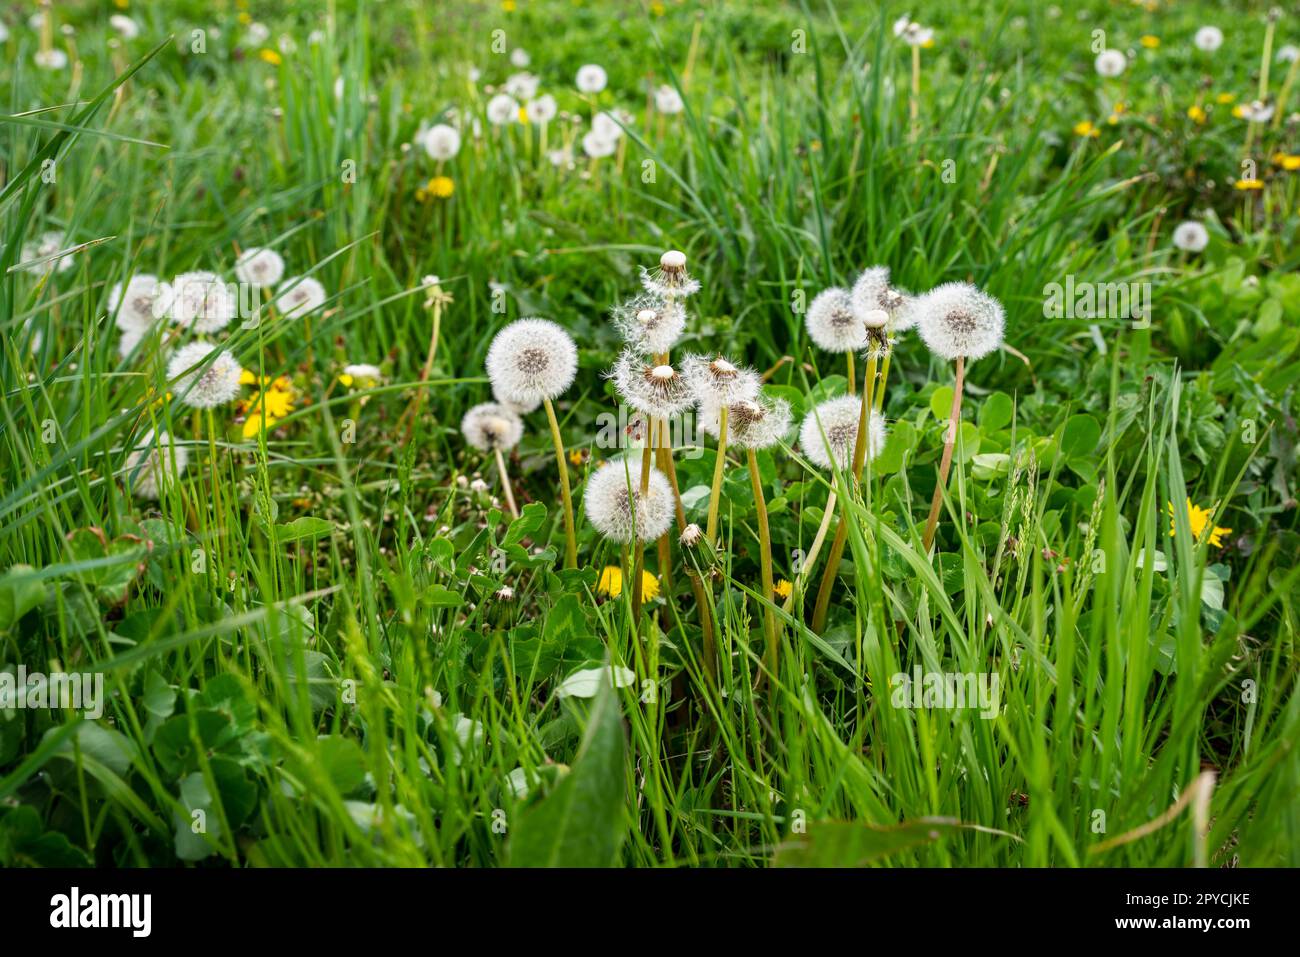 Overgrown grass and dandelions closeup springtime nature background Stock Photo